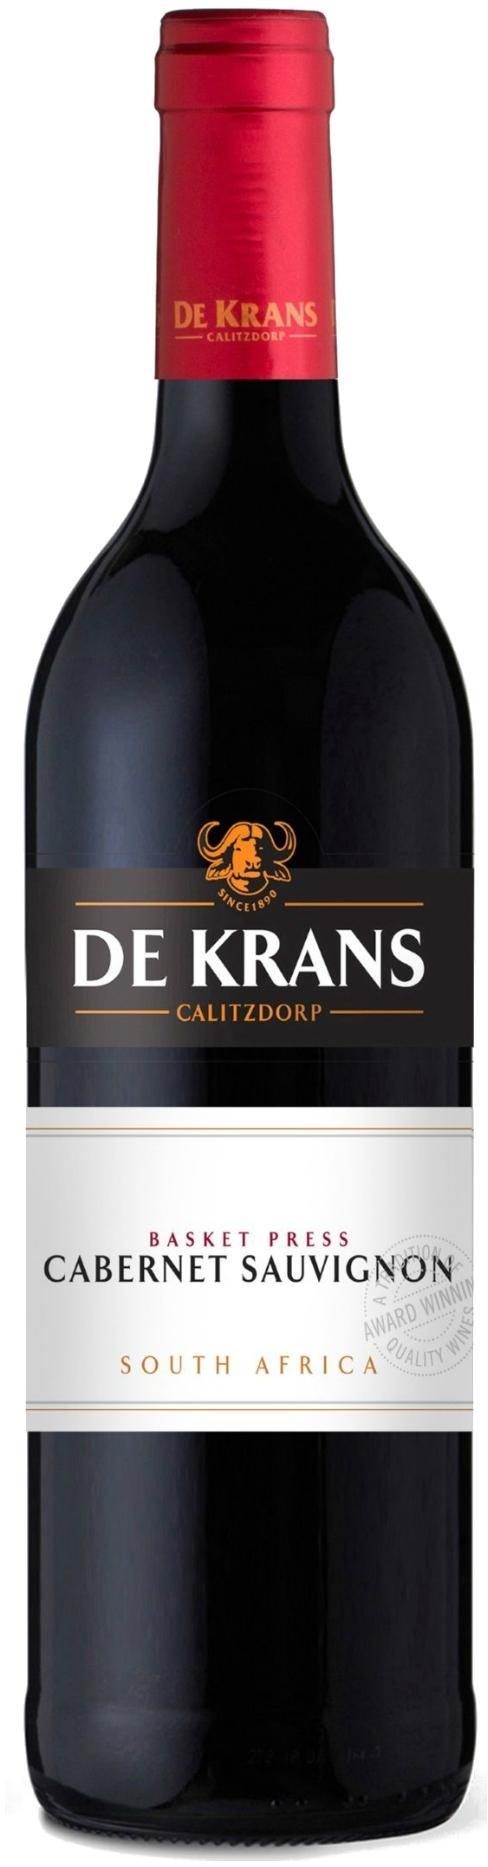 De Krans Basket Press Cabernet Sauvignon (Rotwein, Südafrika, Calitzdorp) |  Curry Premium Wines oHG